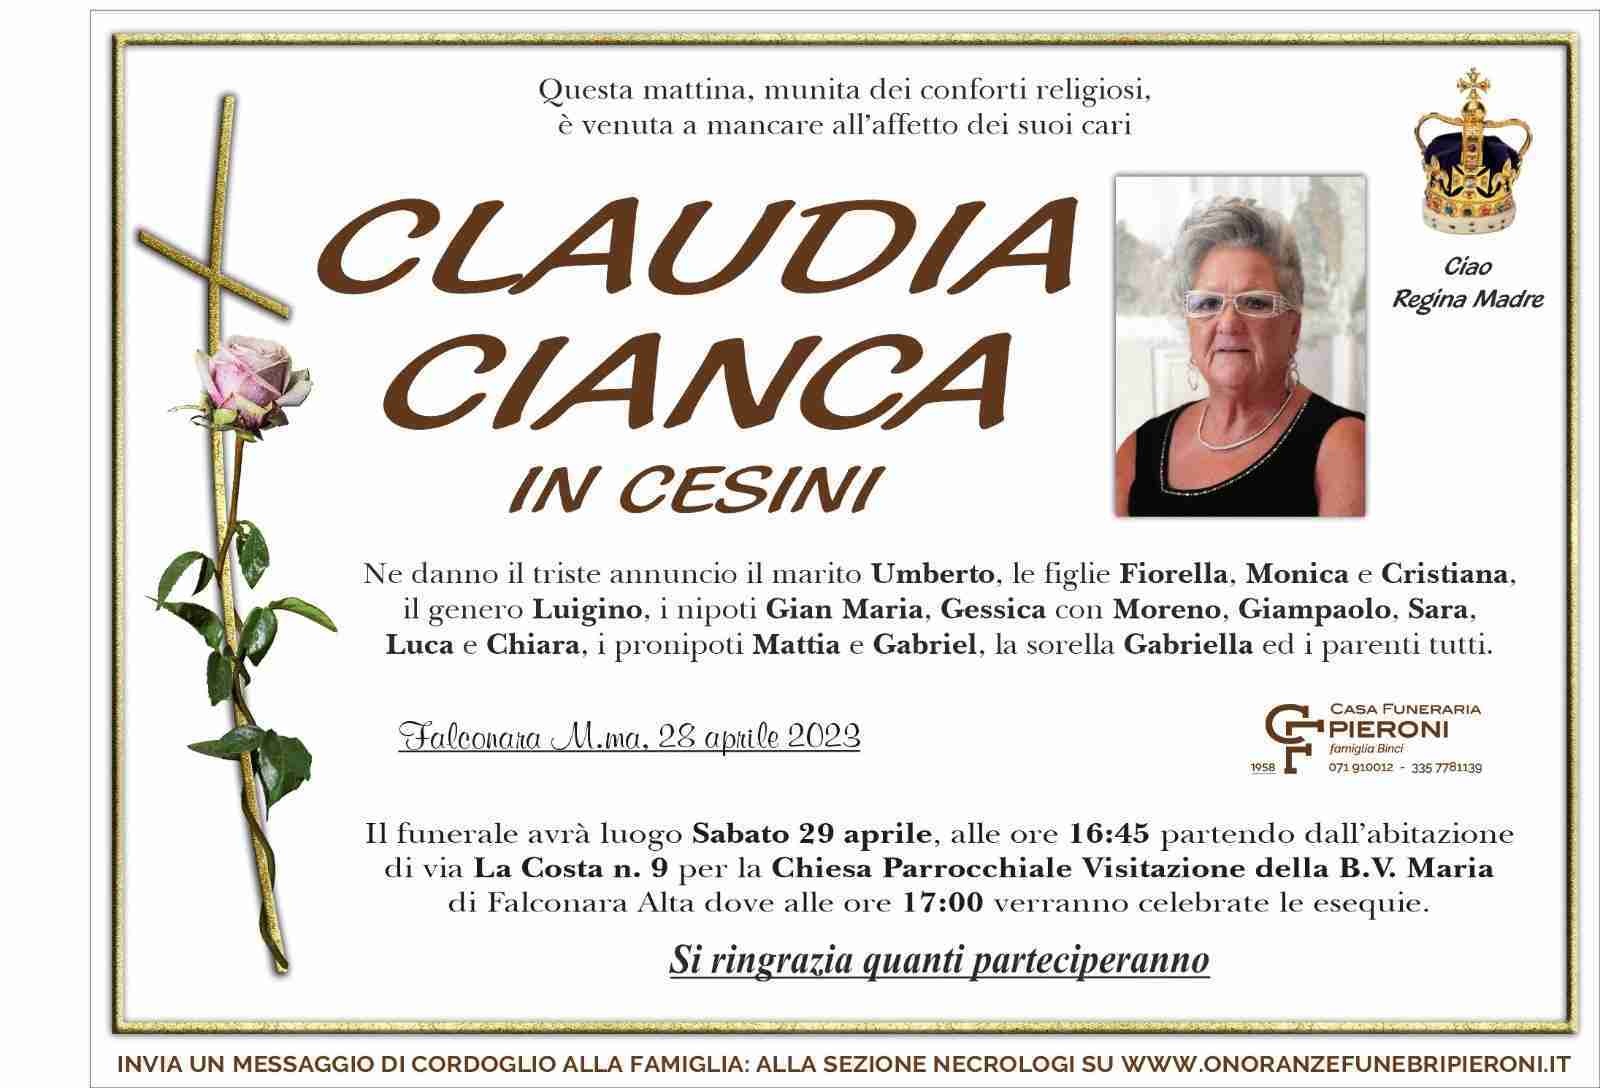 Claudia Cianca